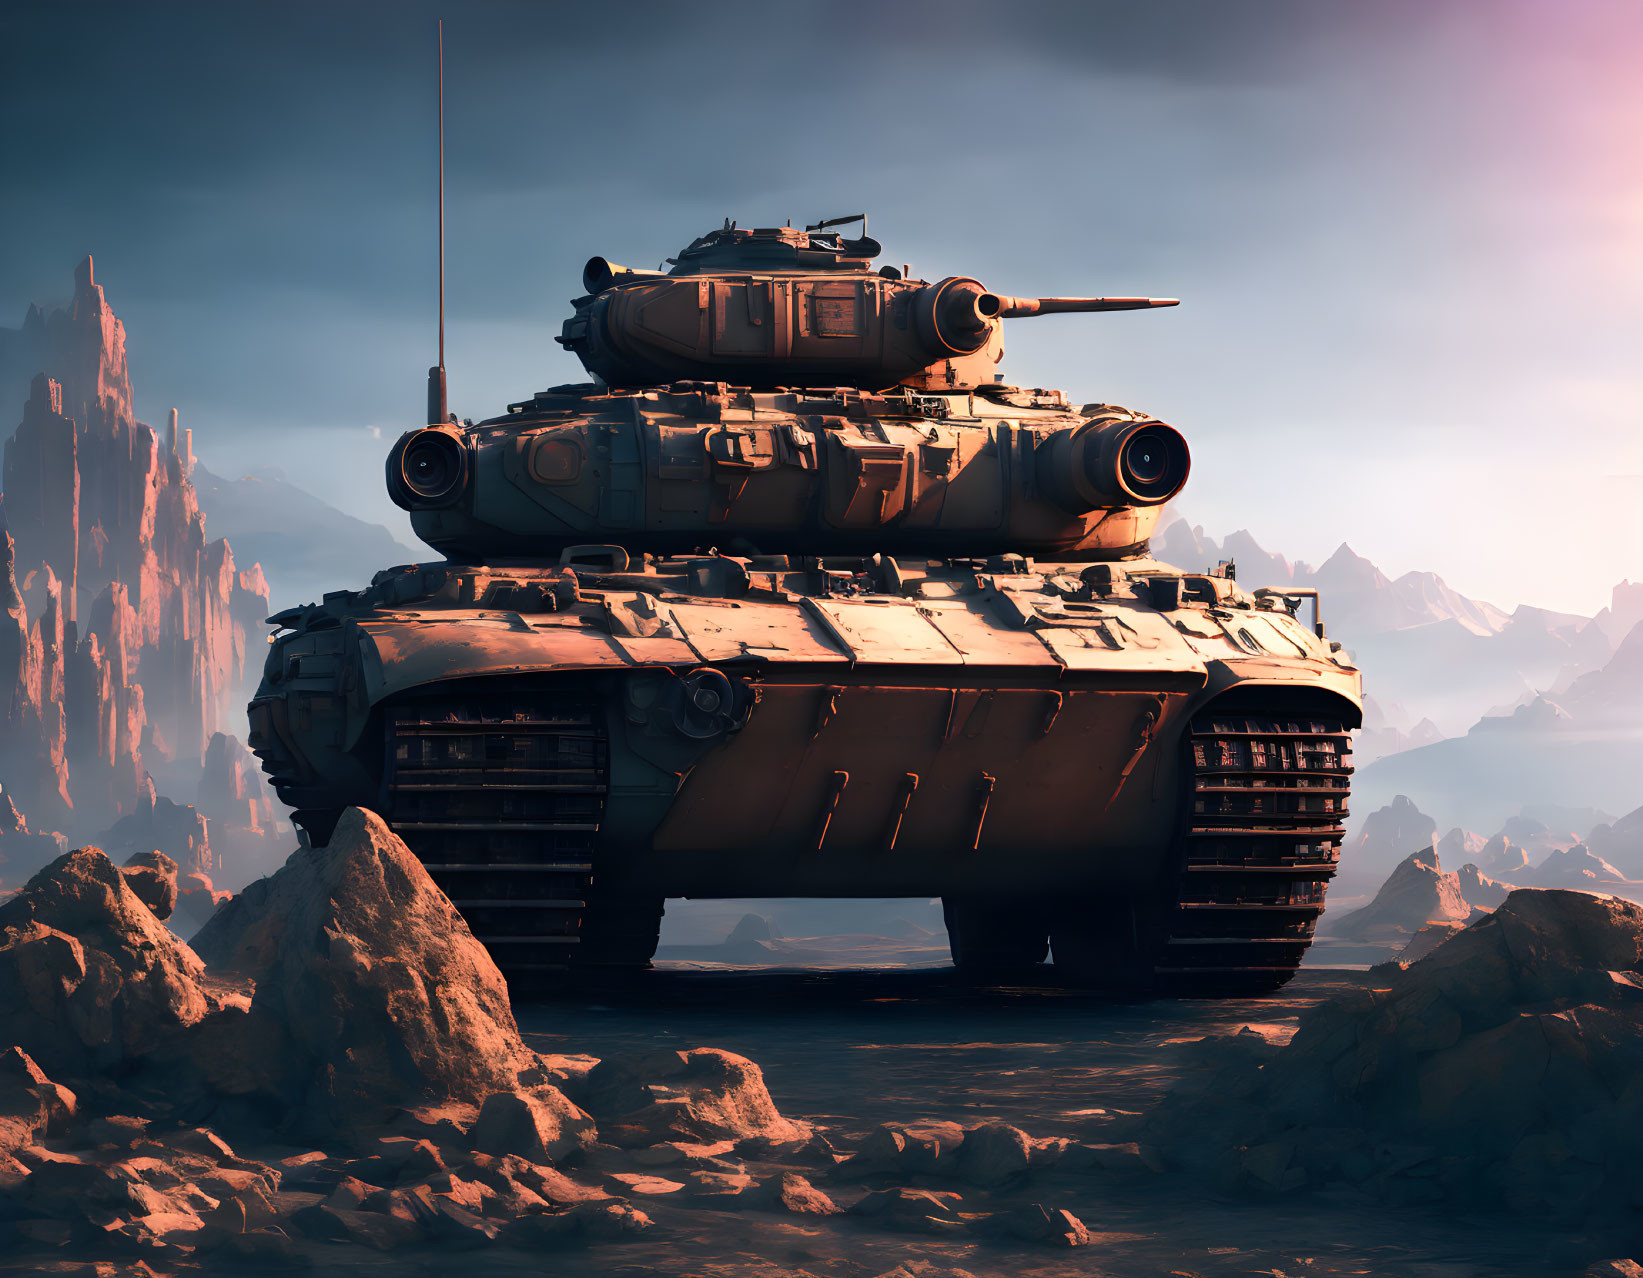 Advanced armored tank on rugged alien landscape at dusk